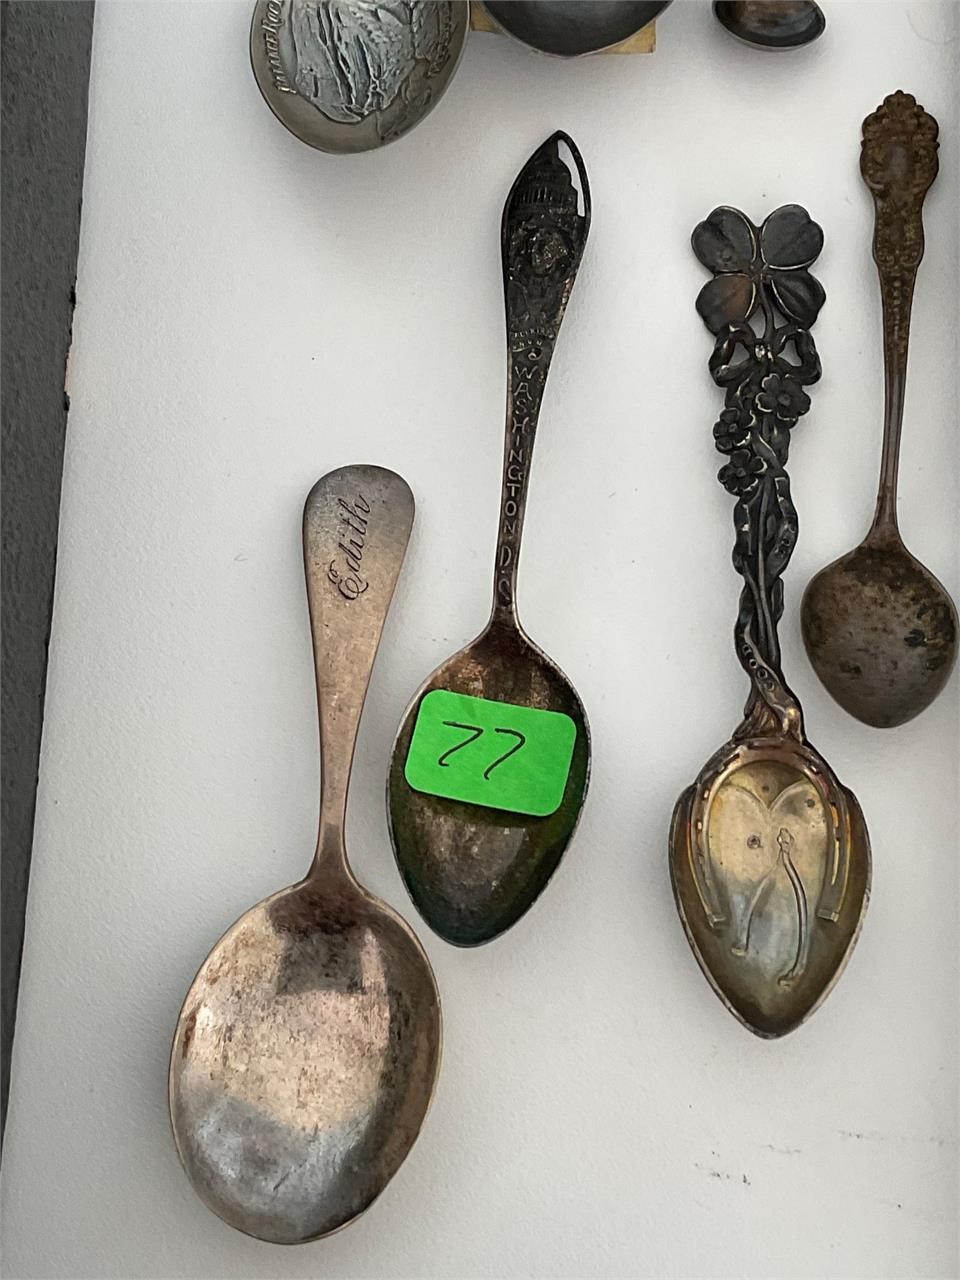 6 Sterling Spoons